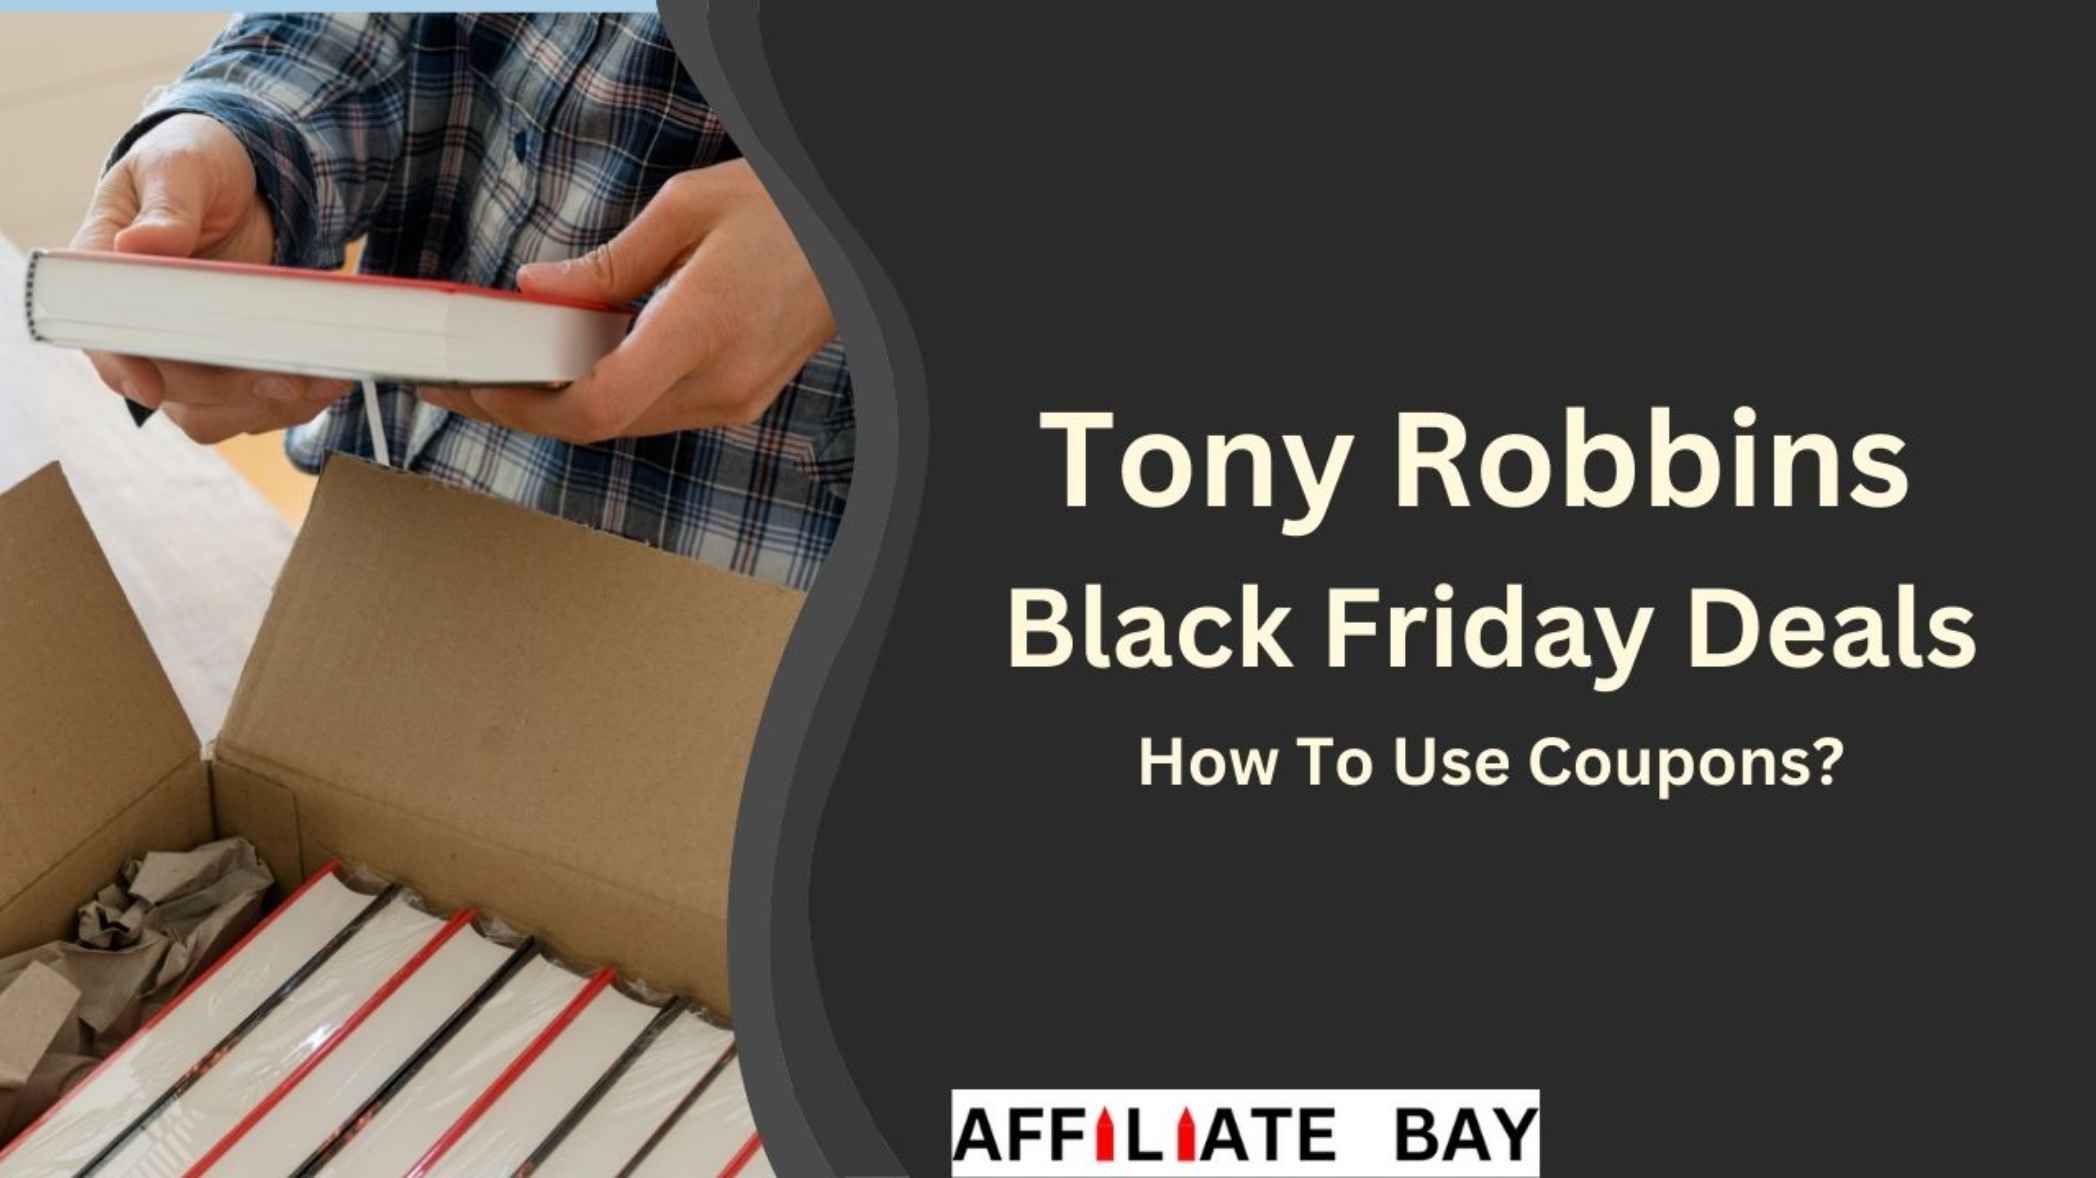 Tony Robbins Black Friday Deals